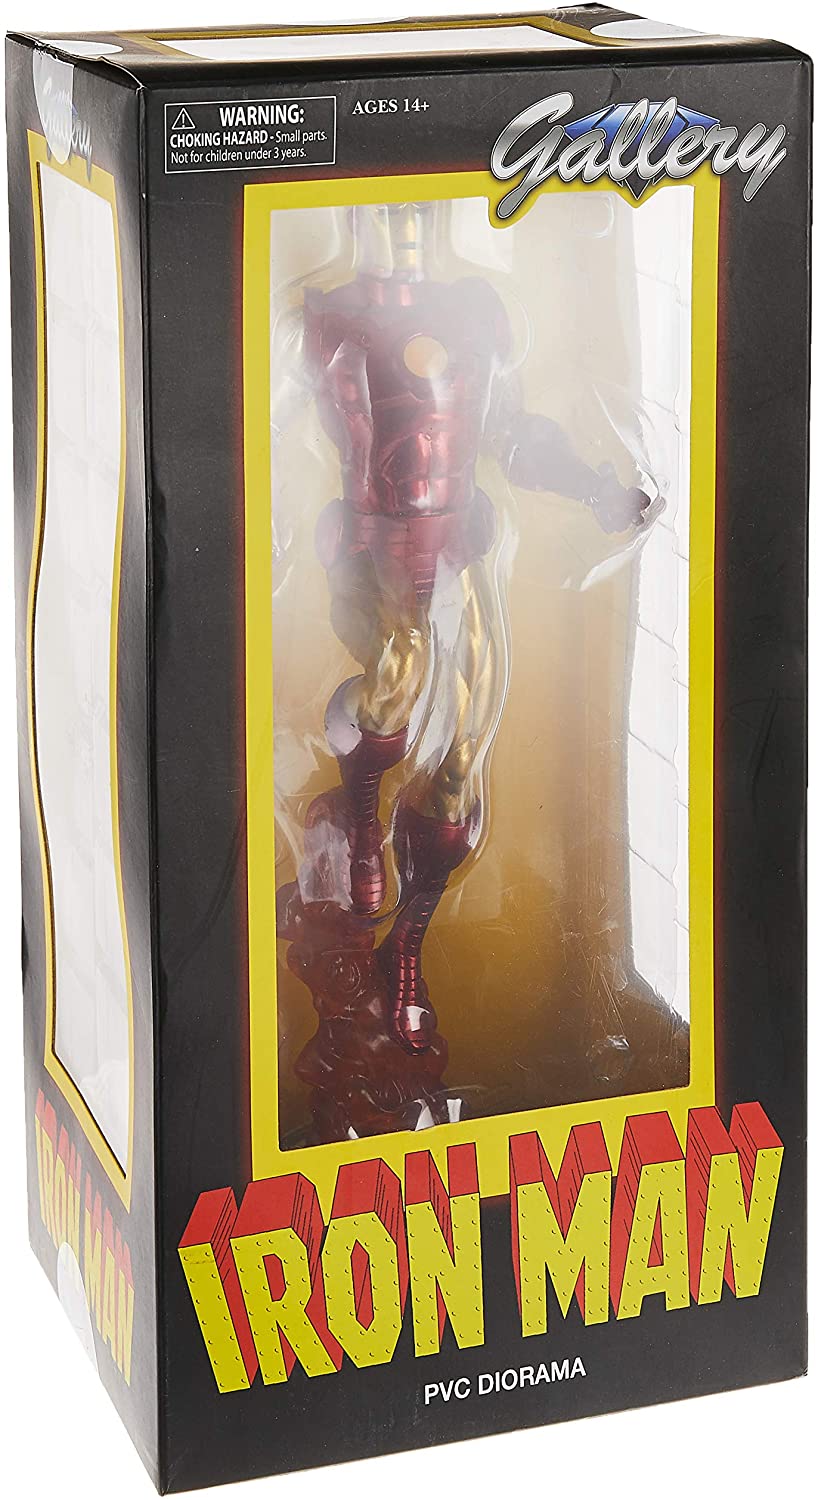 Marvel Comics JAN172648 Galleria Classic Iron Man PVC Figure, Standard